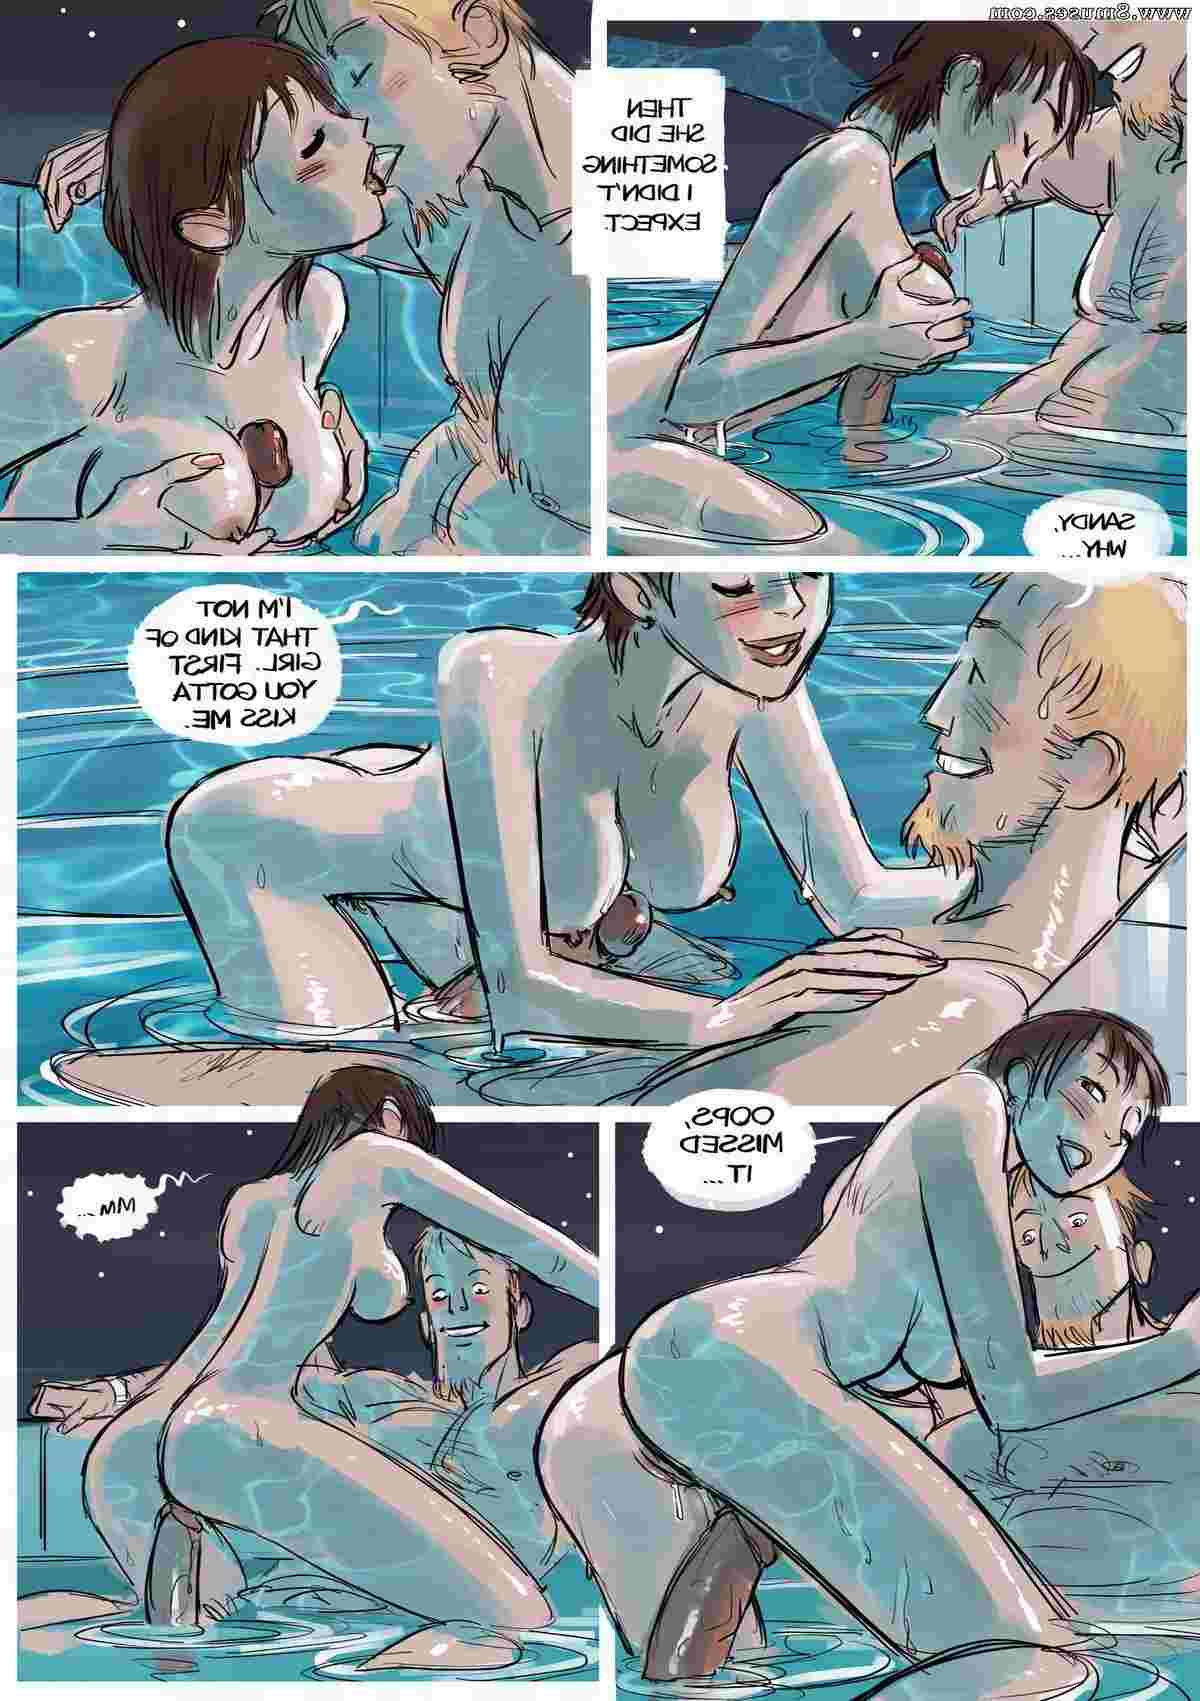 Slipshine-Comics/Lust-Boat Lust_Boat__8muses_-_Sex_and_Porn_Comics_68.jpg